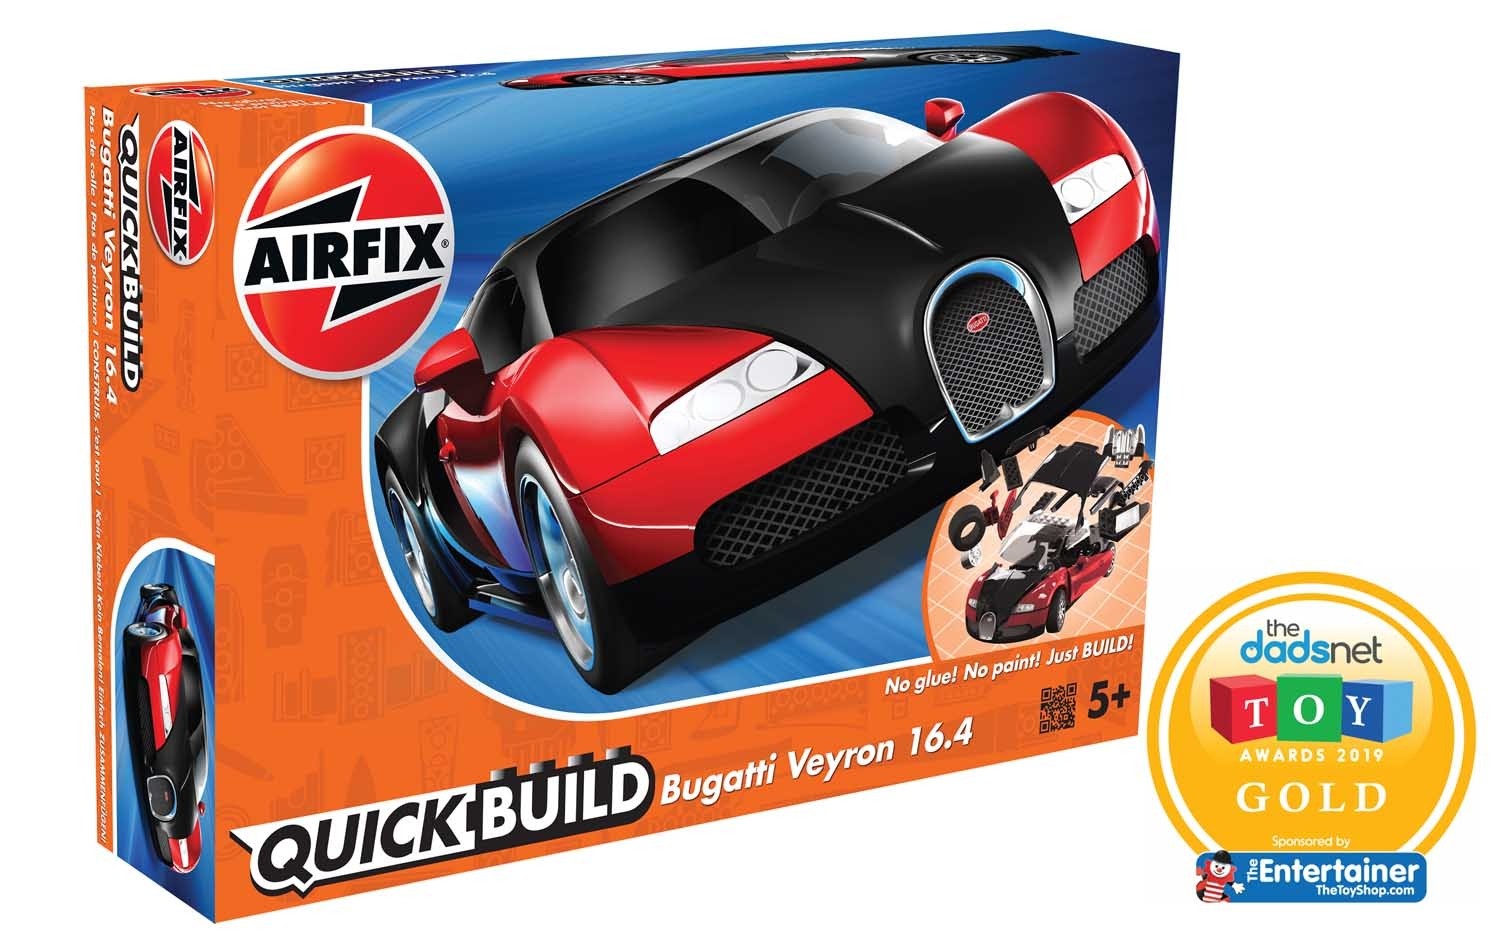 Airfix QUICK BUILD Bugatti 16.4 Veyron black/red - DC Models